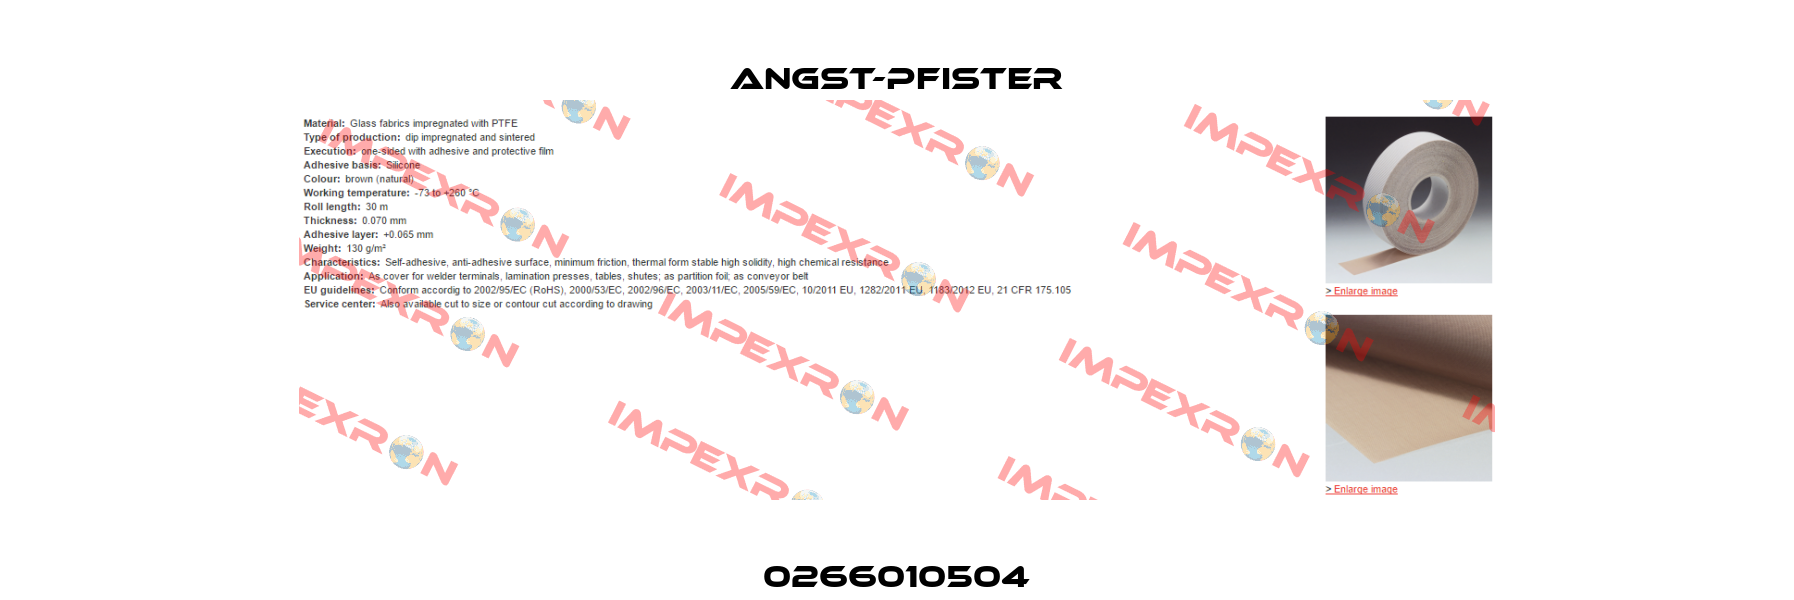 0266010504 Angst-Pfister